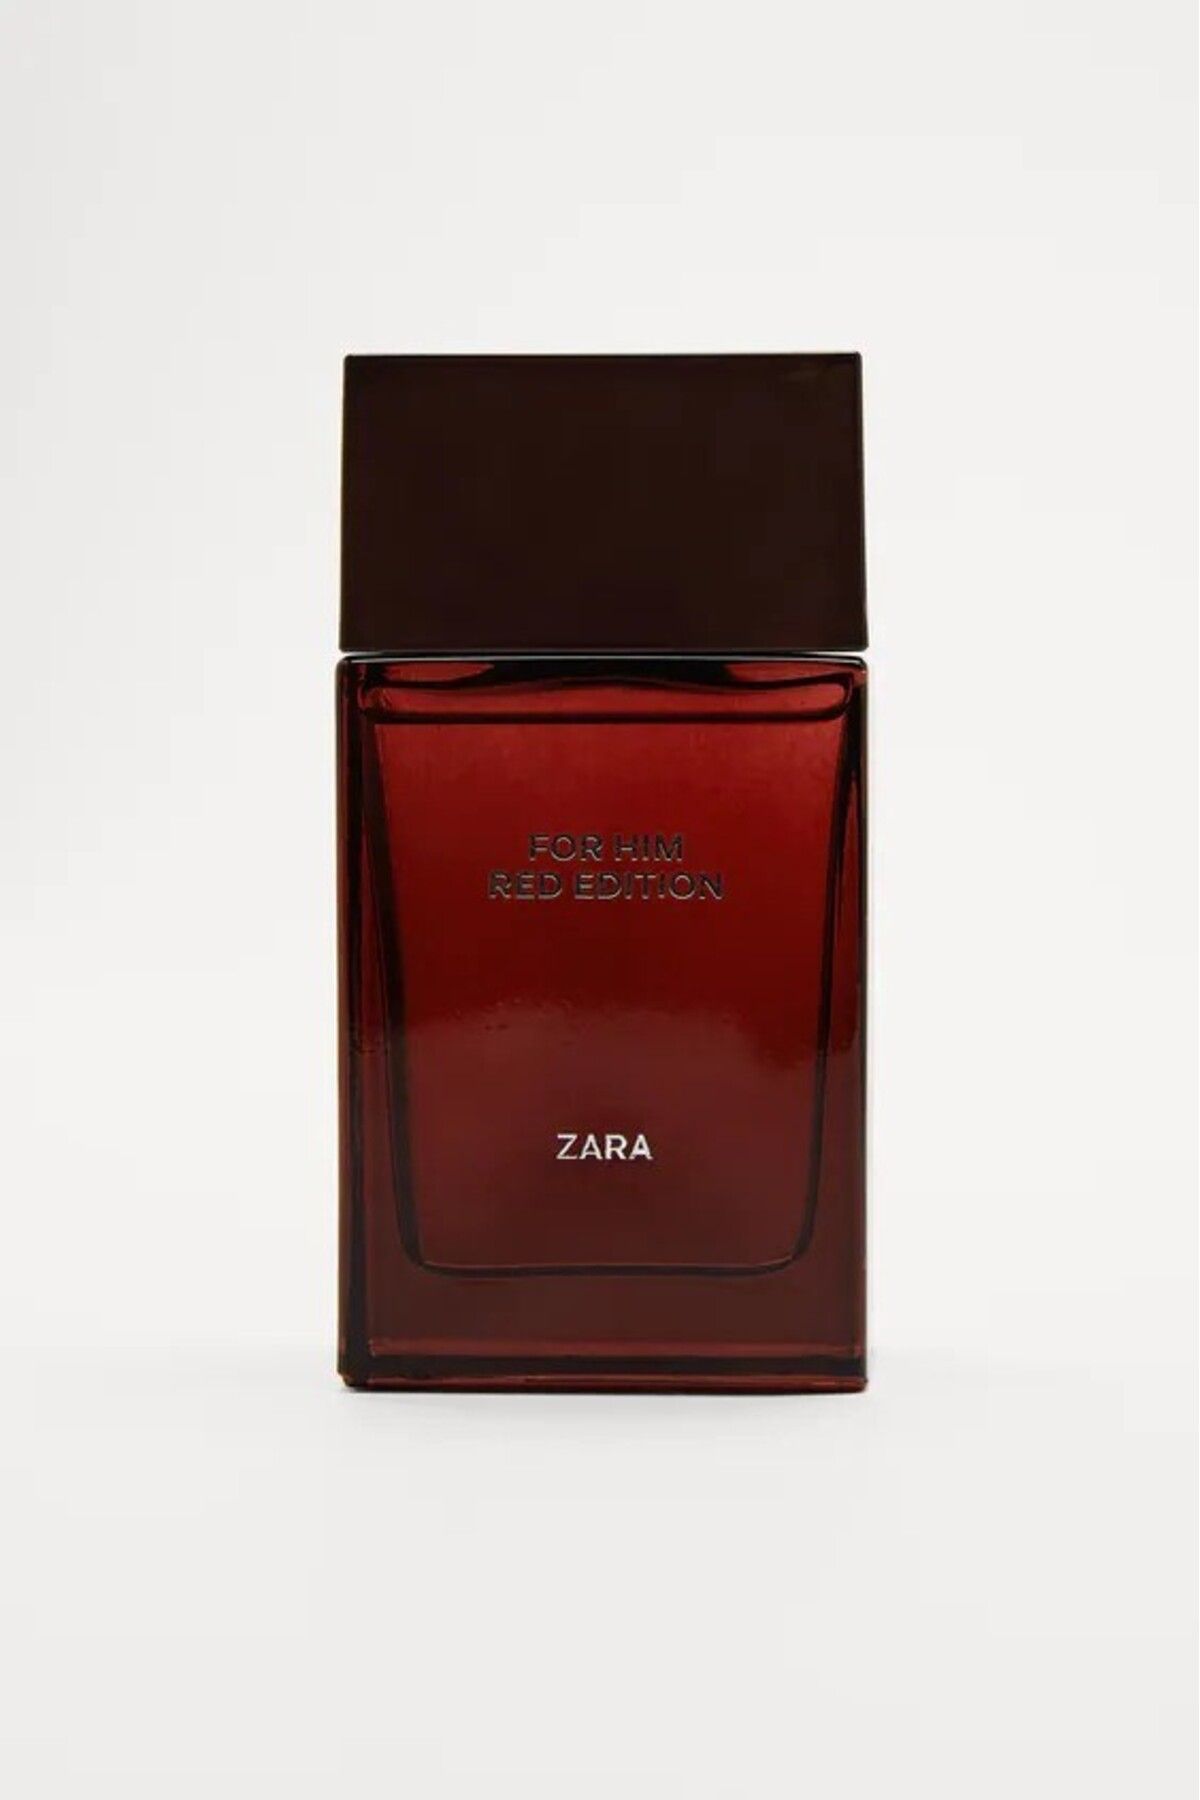 Zara For Hım Red Edıtıon Eau De Toılette 100 ml (3,38 FL. OZ). Erkek Parfüm (İNDİRİM ŞEHRİ)